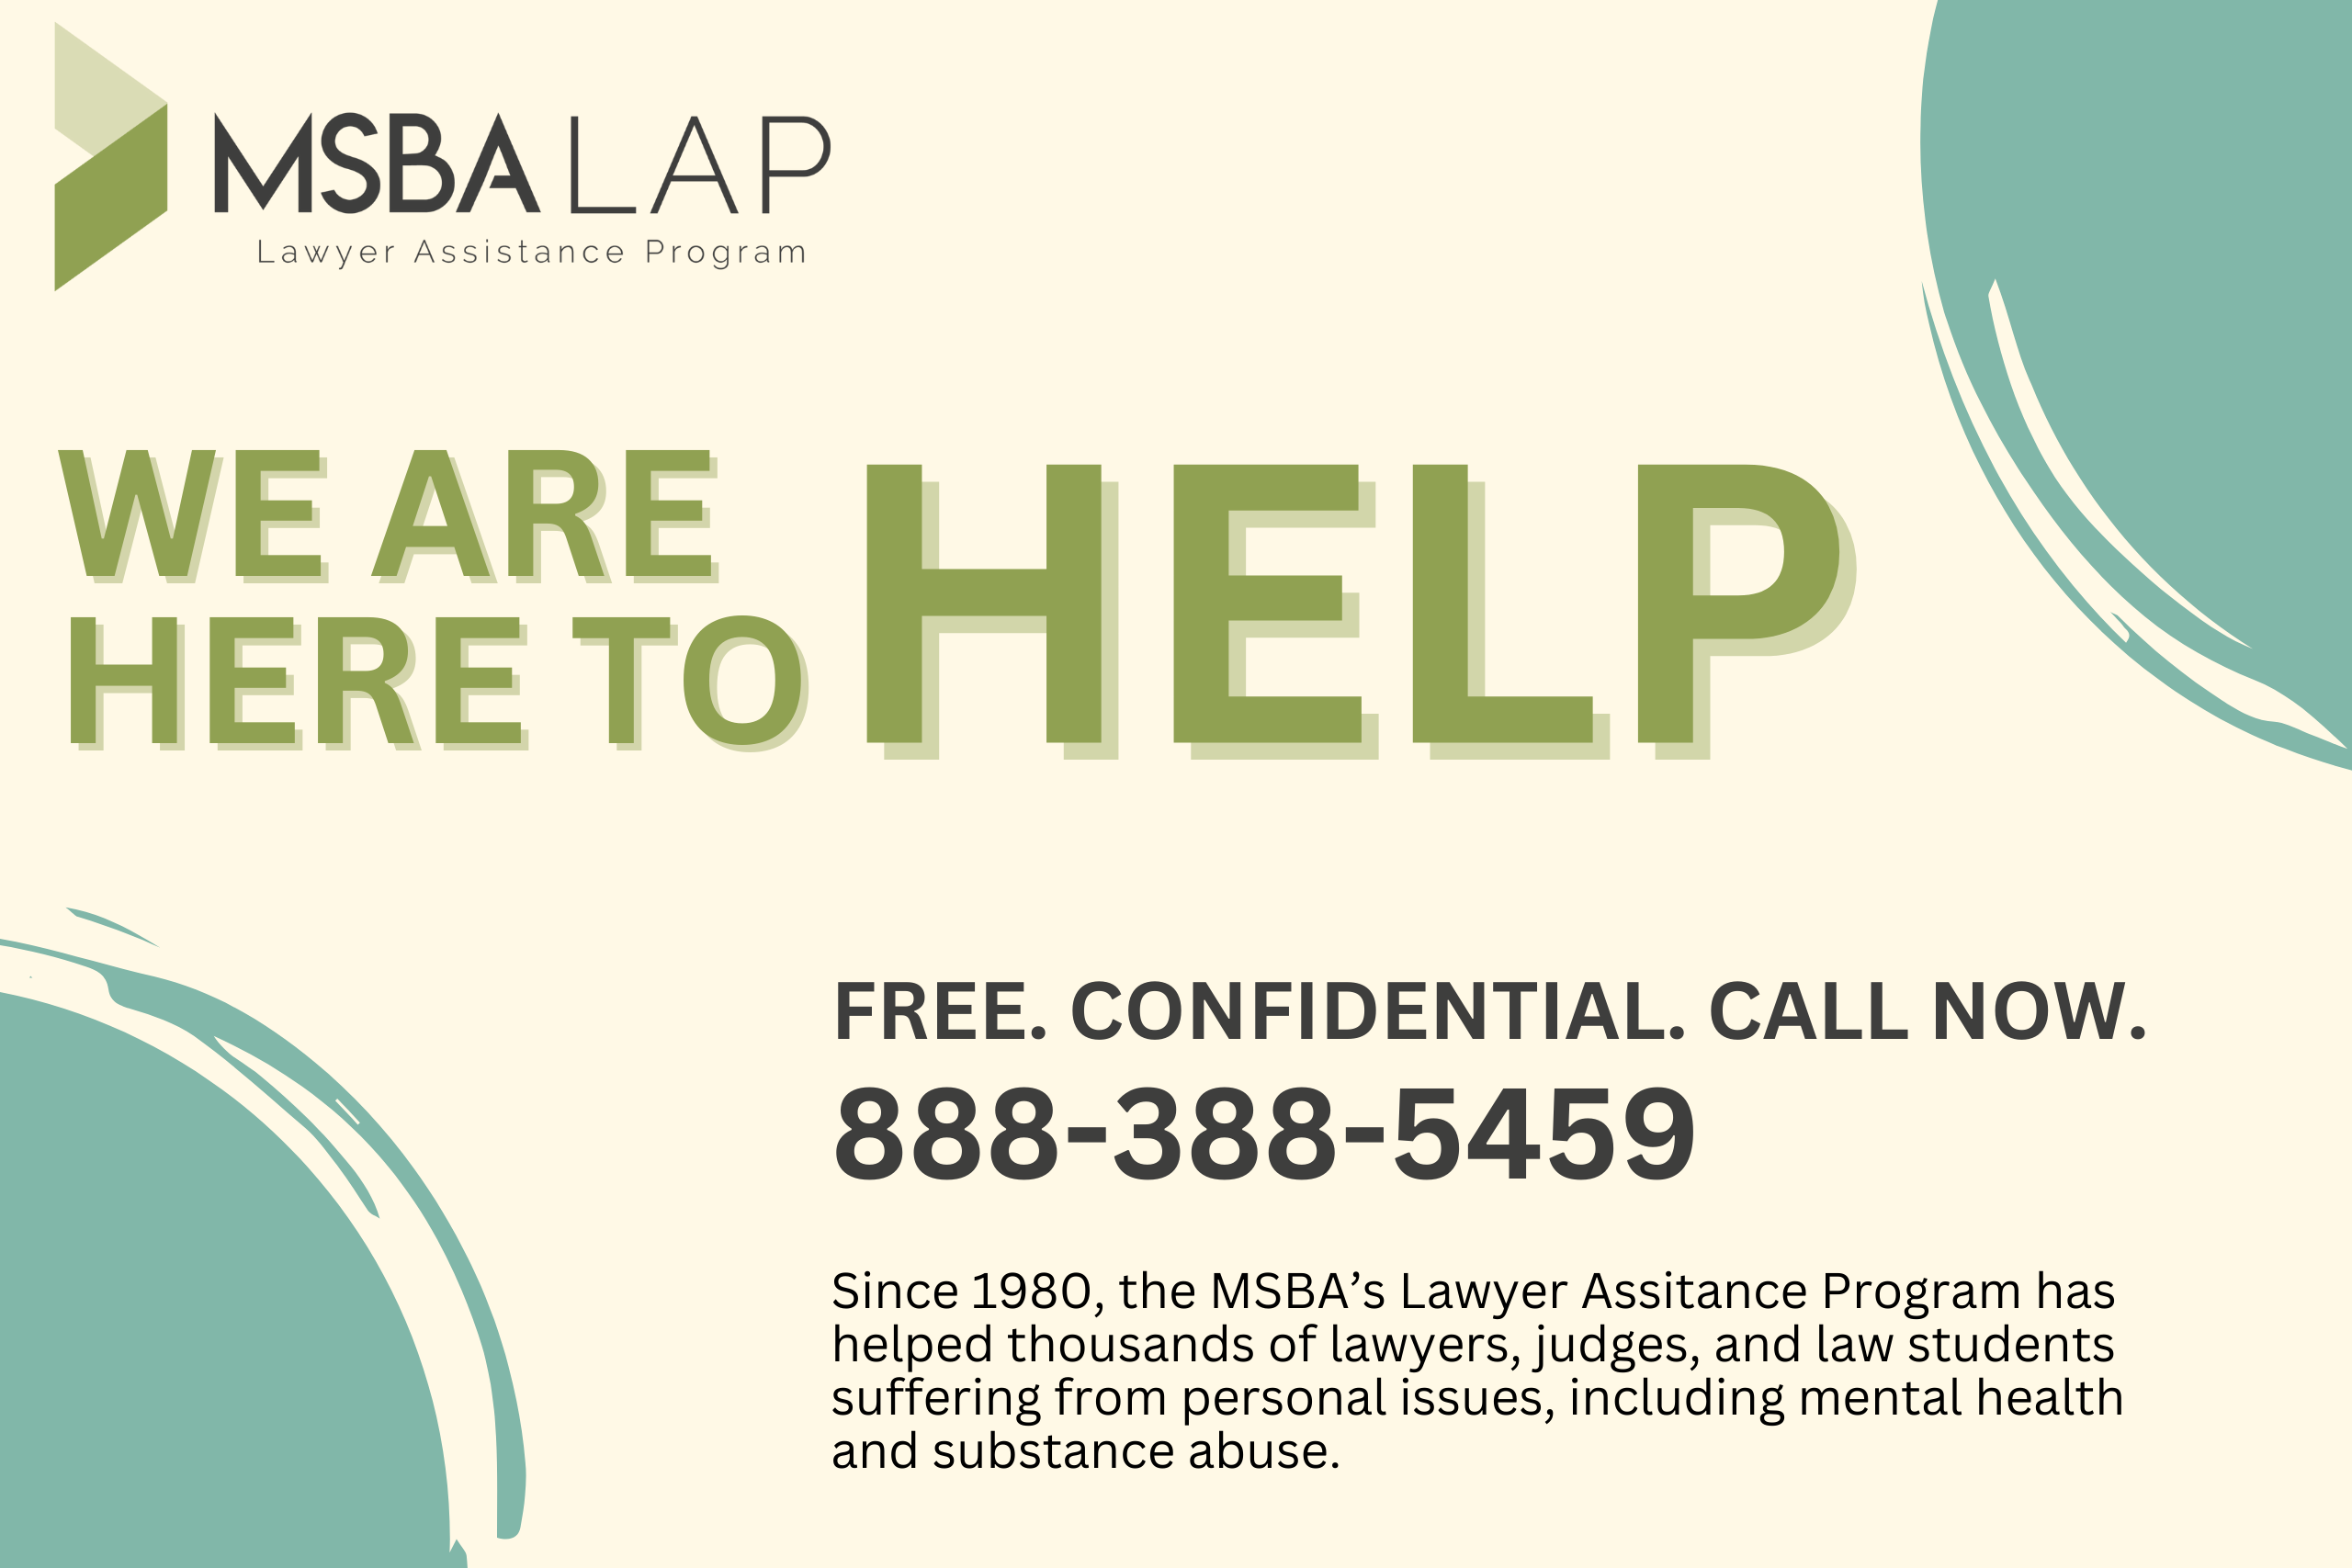 Lawyer Assistance Program hotline and help information.